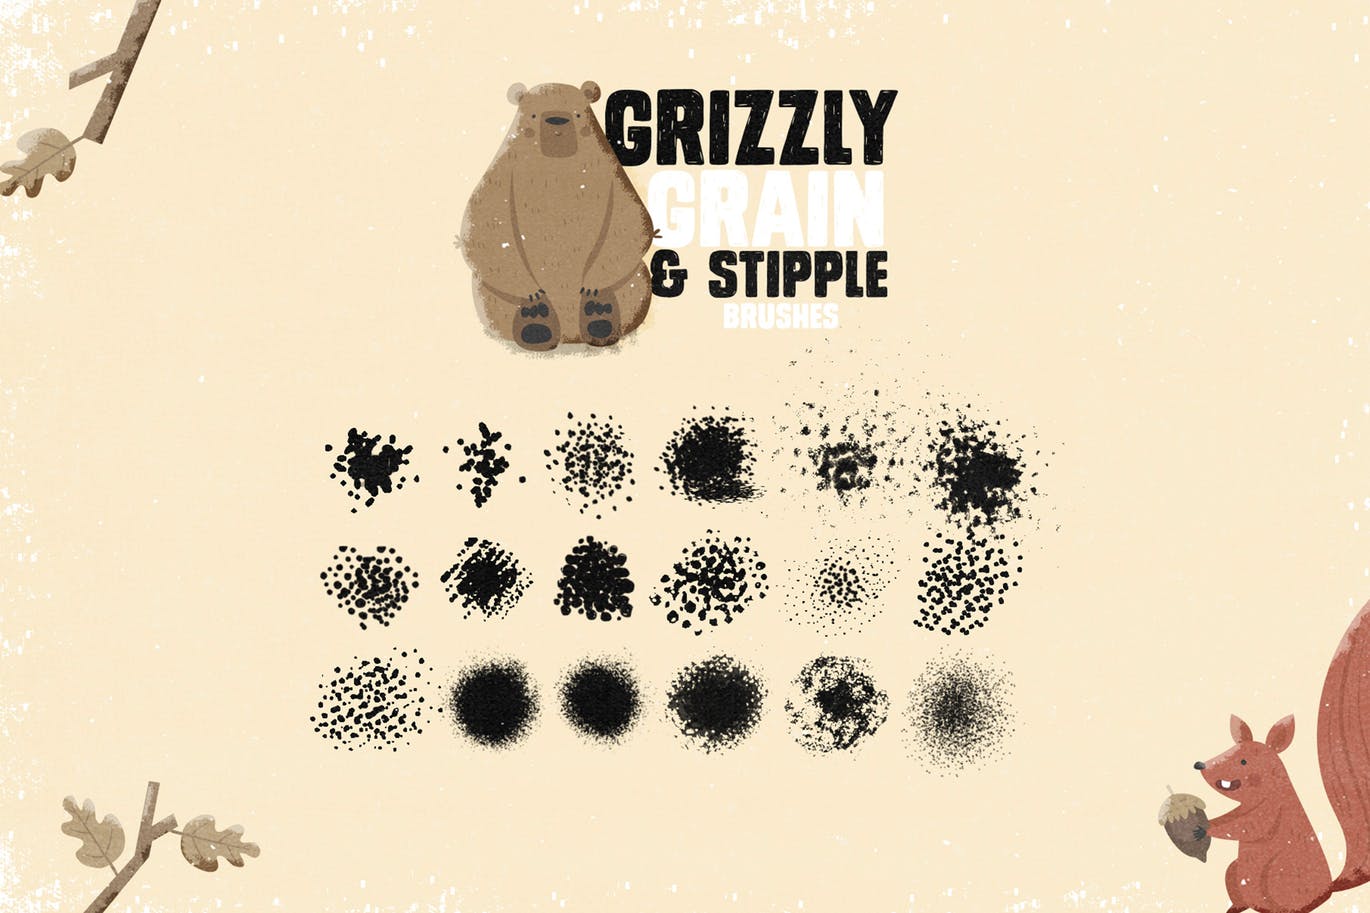 手绘设计师必备-流行的仿旧阴影效果点画创作PS笔刷第一素材精选 Grizzly Grain & Stipple Shader Brushes插图(5)